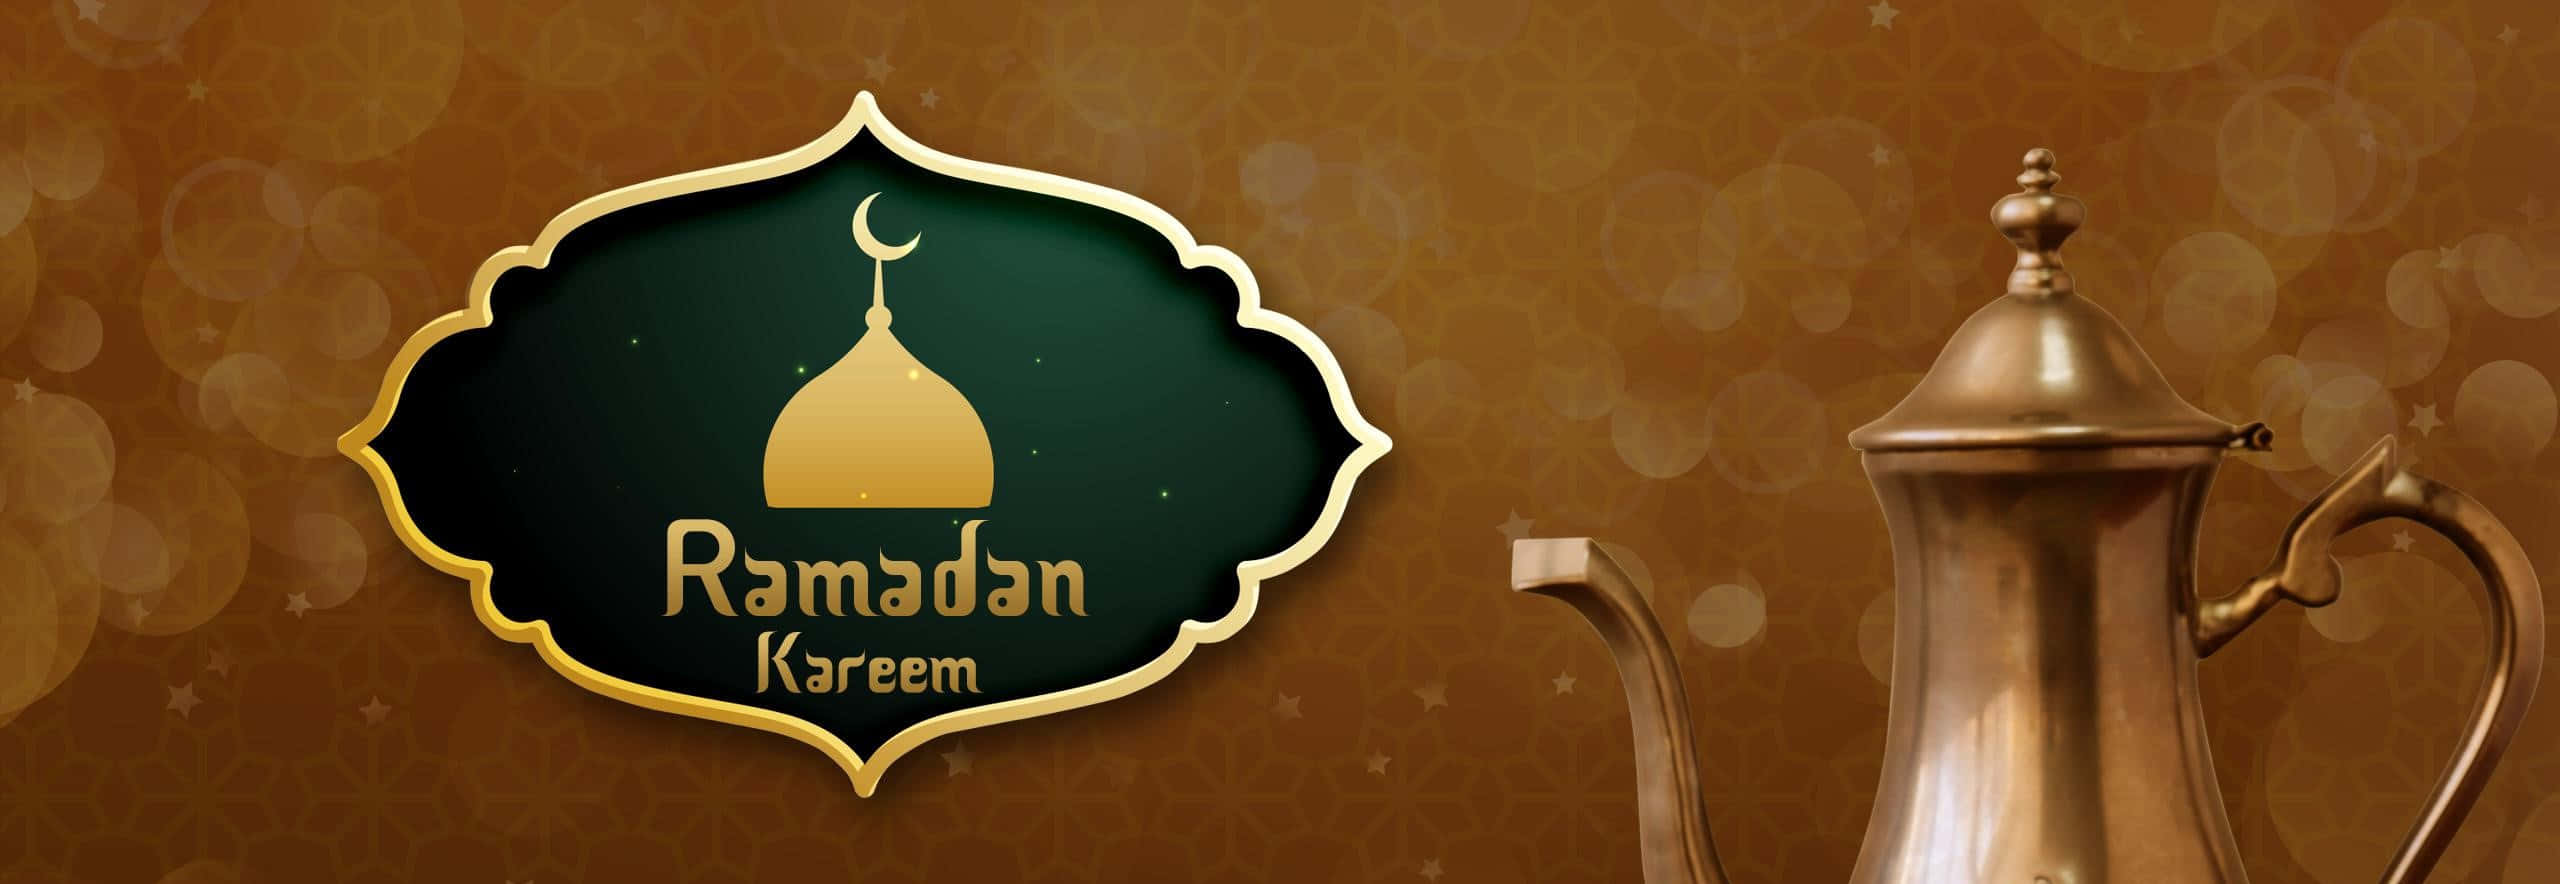 Ramadan Kareem Picture